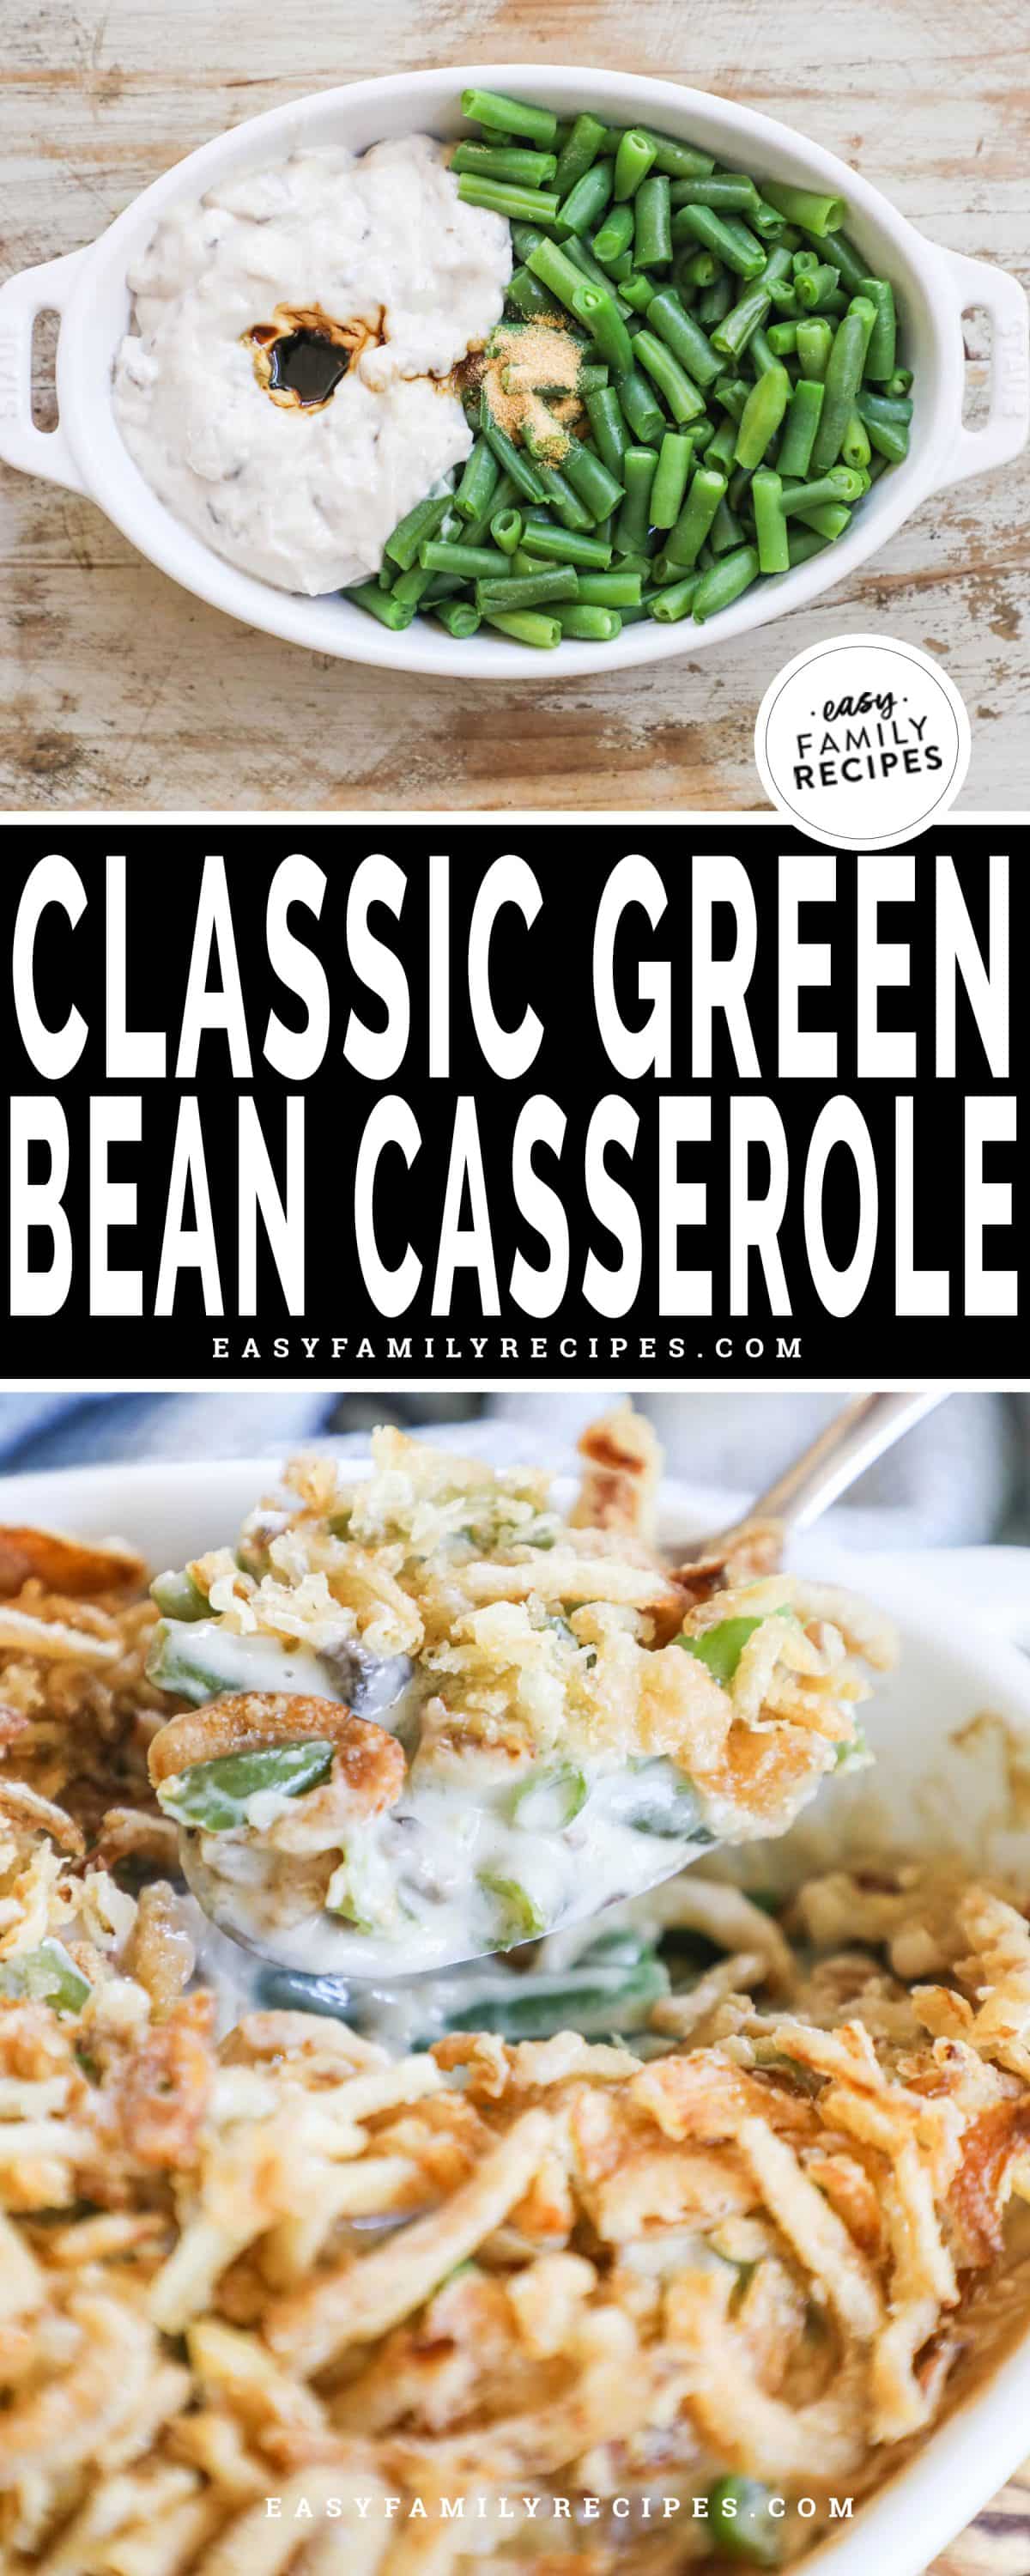 green bean casserole being mixed in a casserole dish, then served after baking.